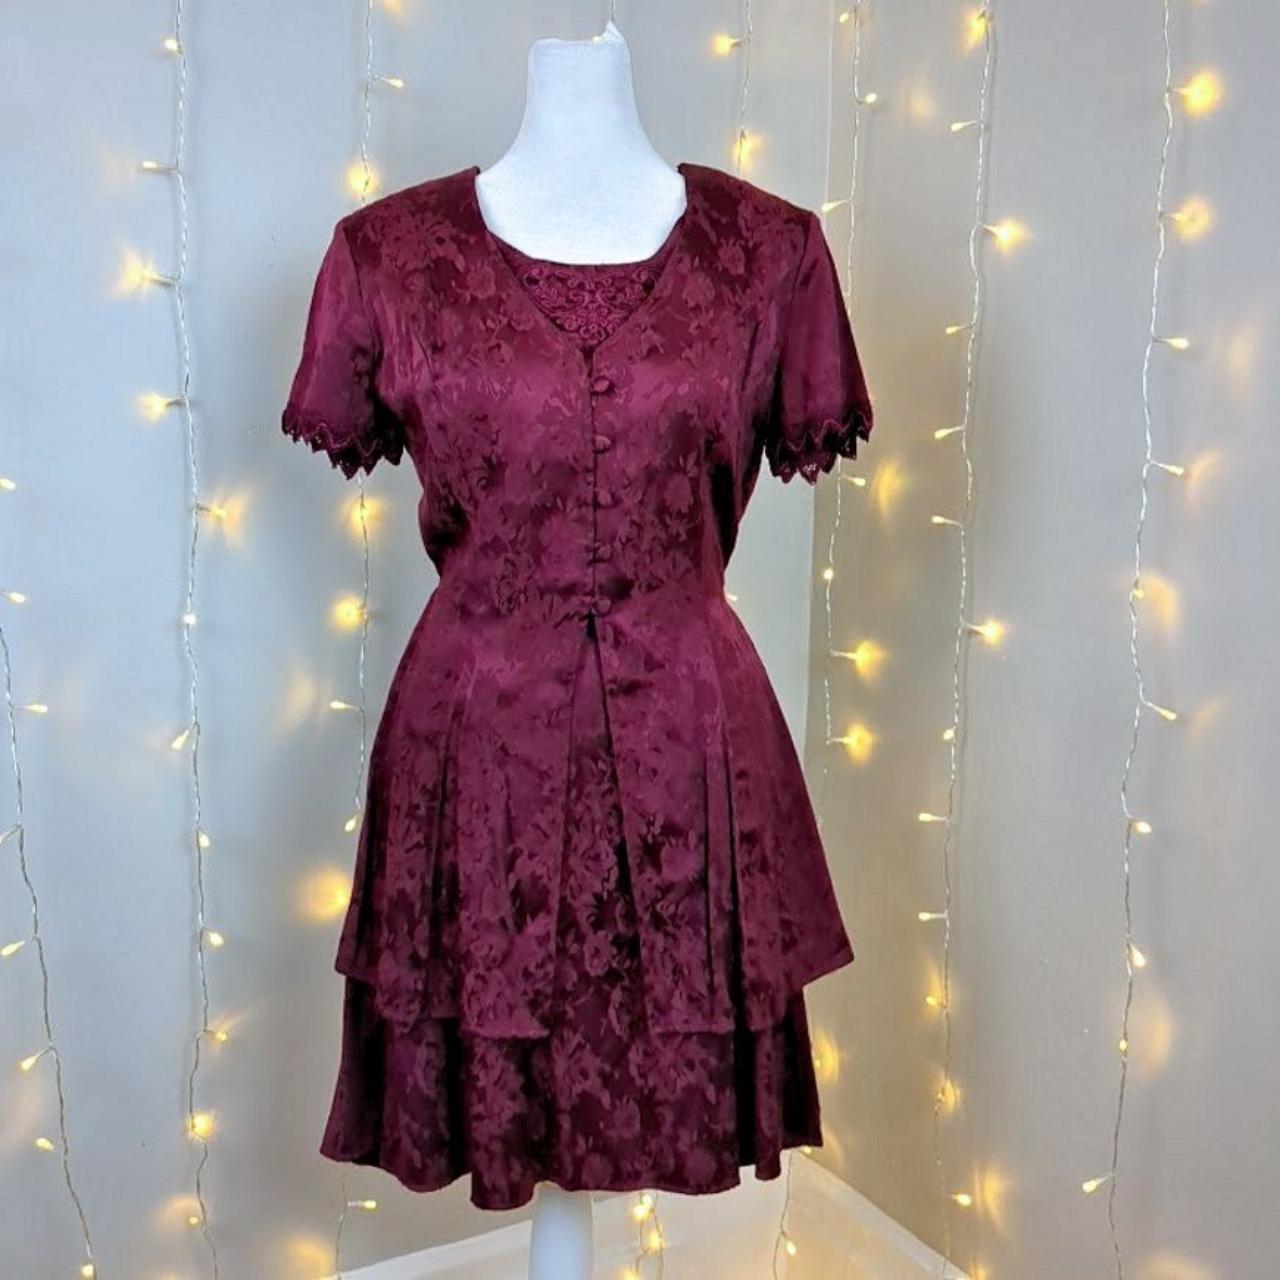 Unbranded vintage 90s maroon mini dress. Floral... - Depop